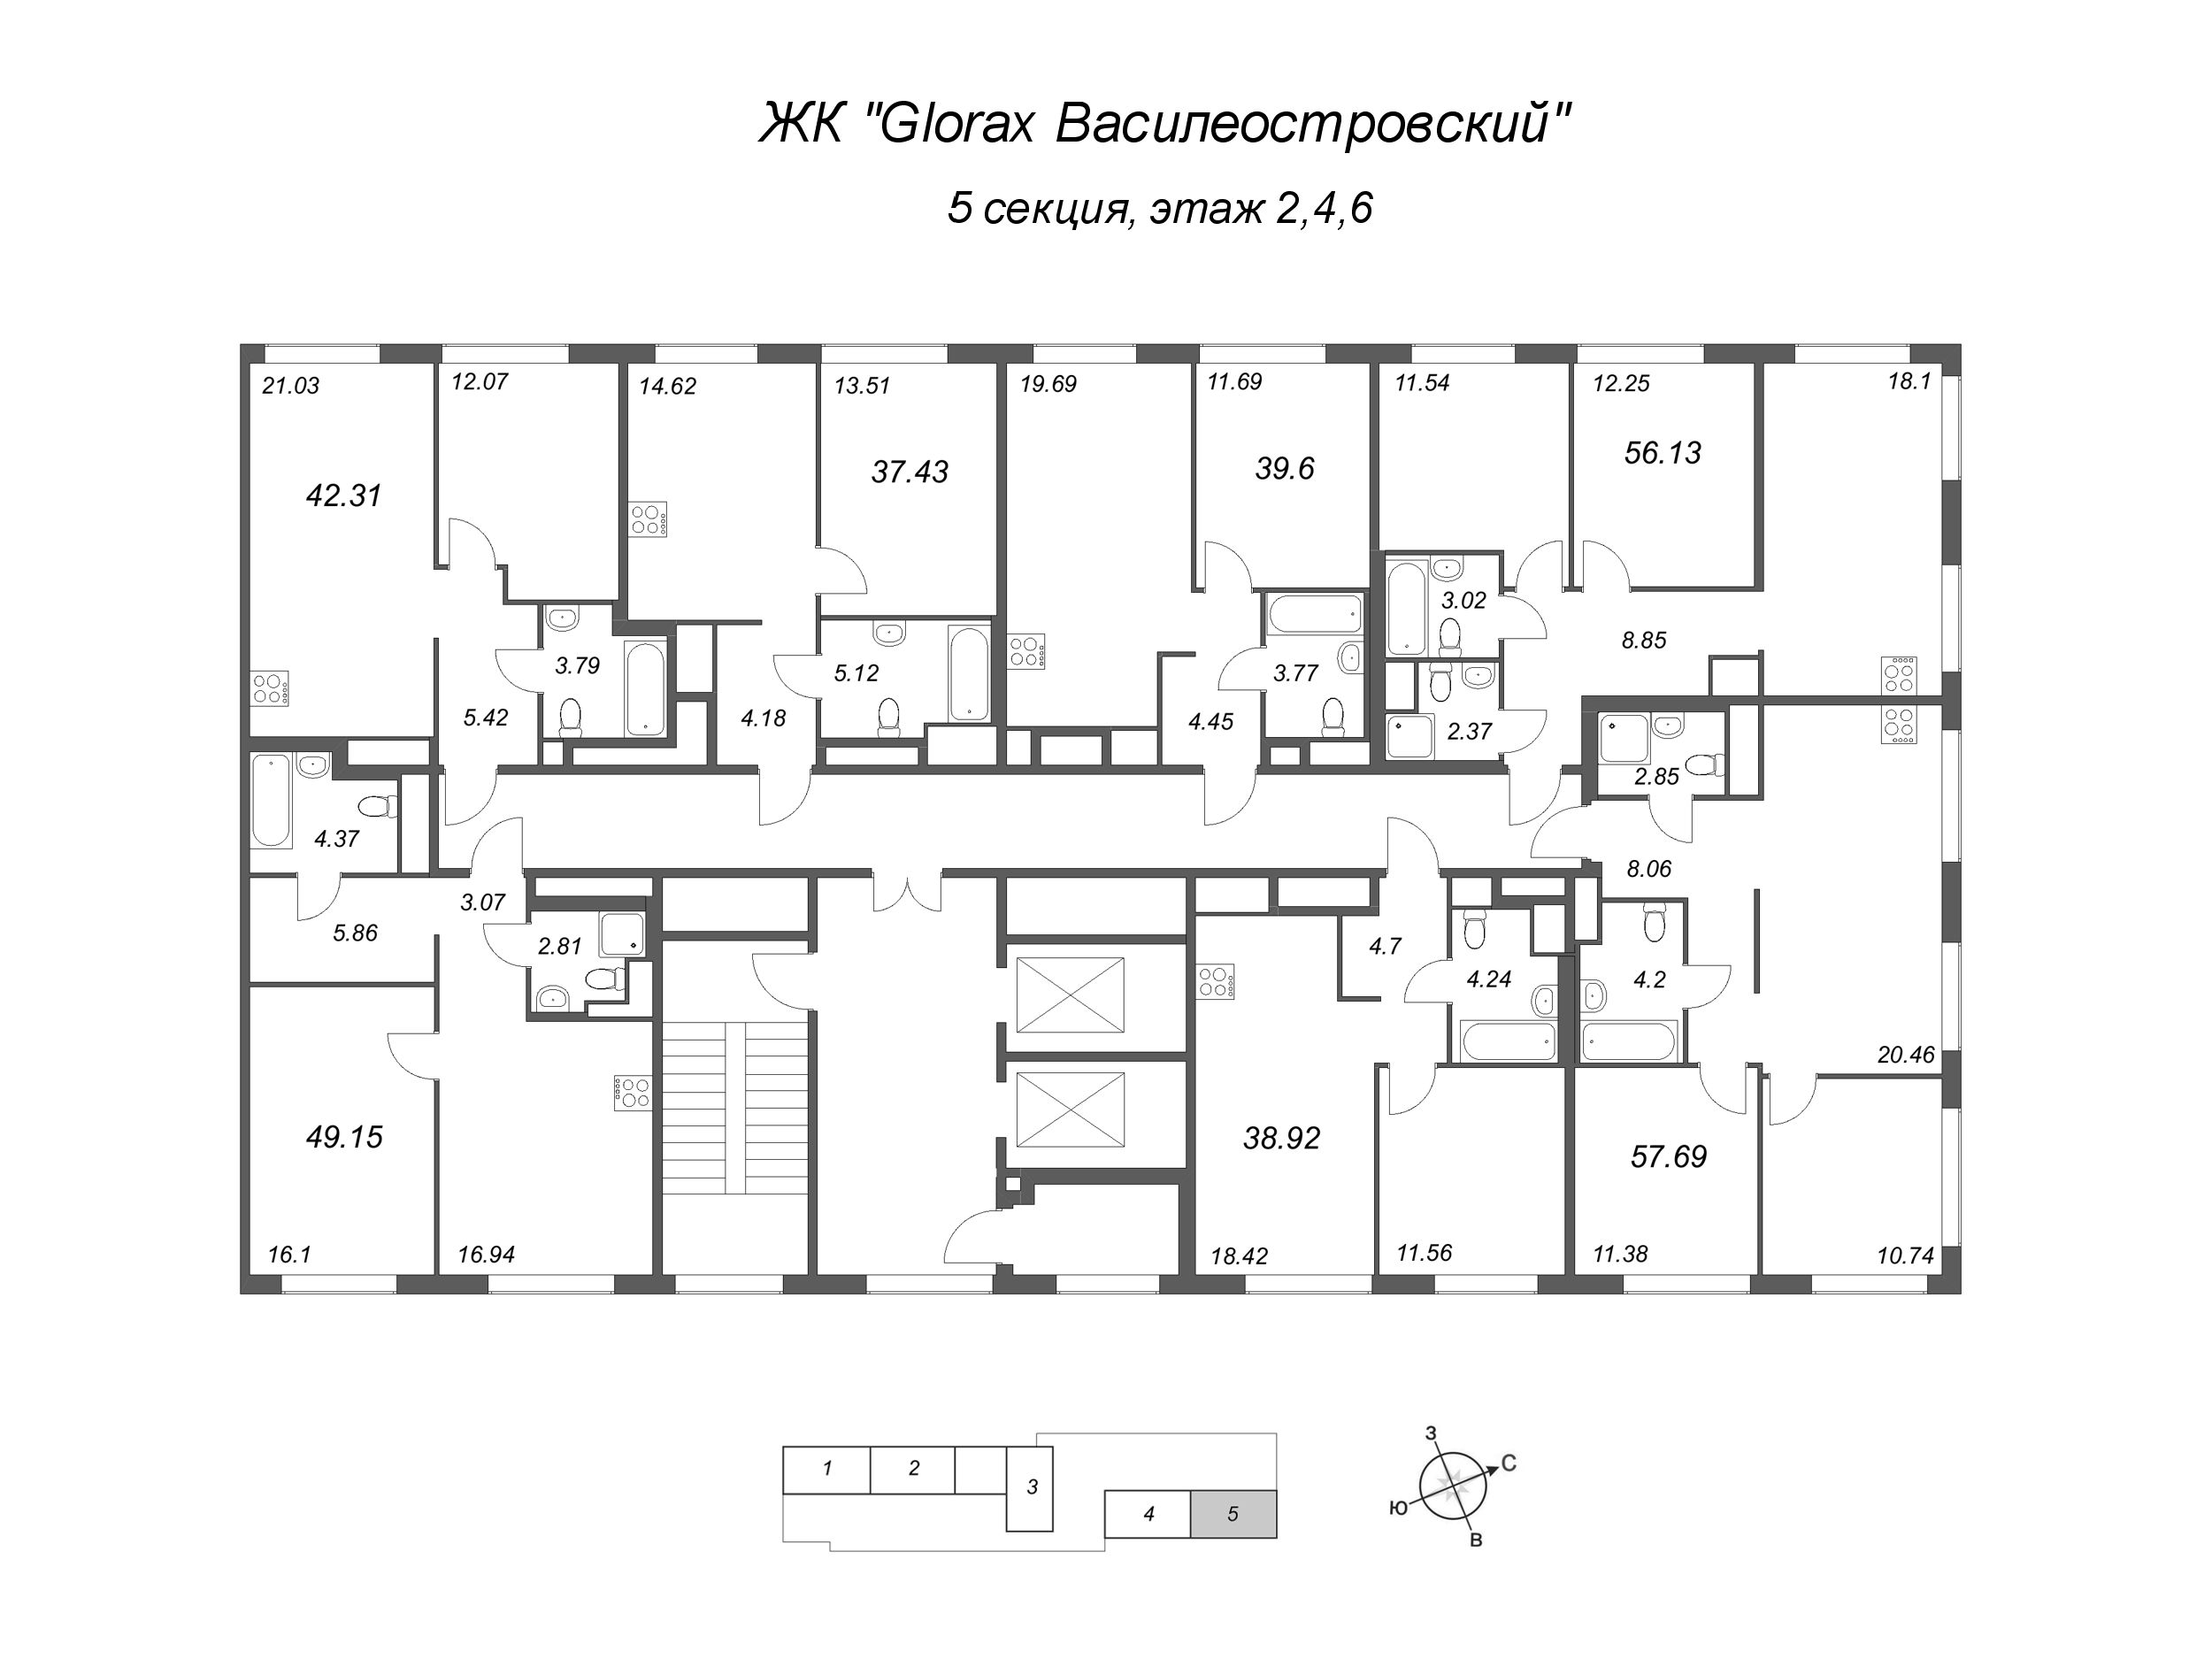 2-комнатная (Евро) квартира, 49.15 м² - планировка этажа